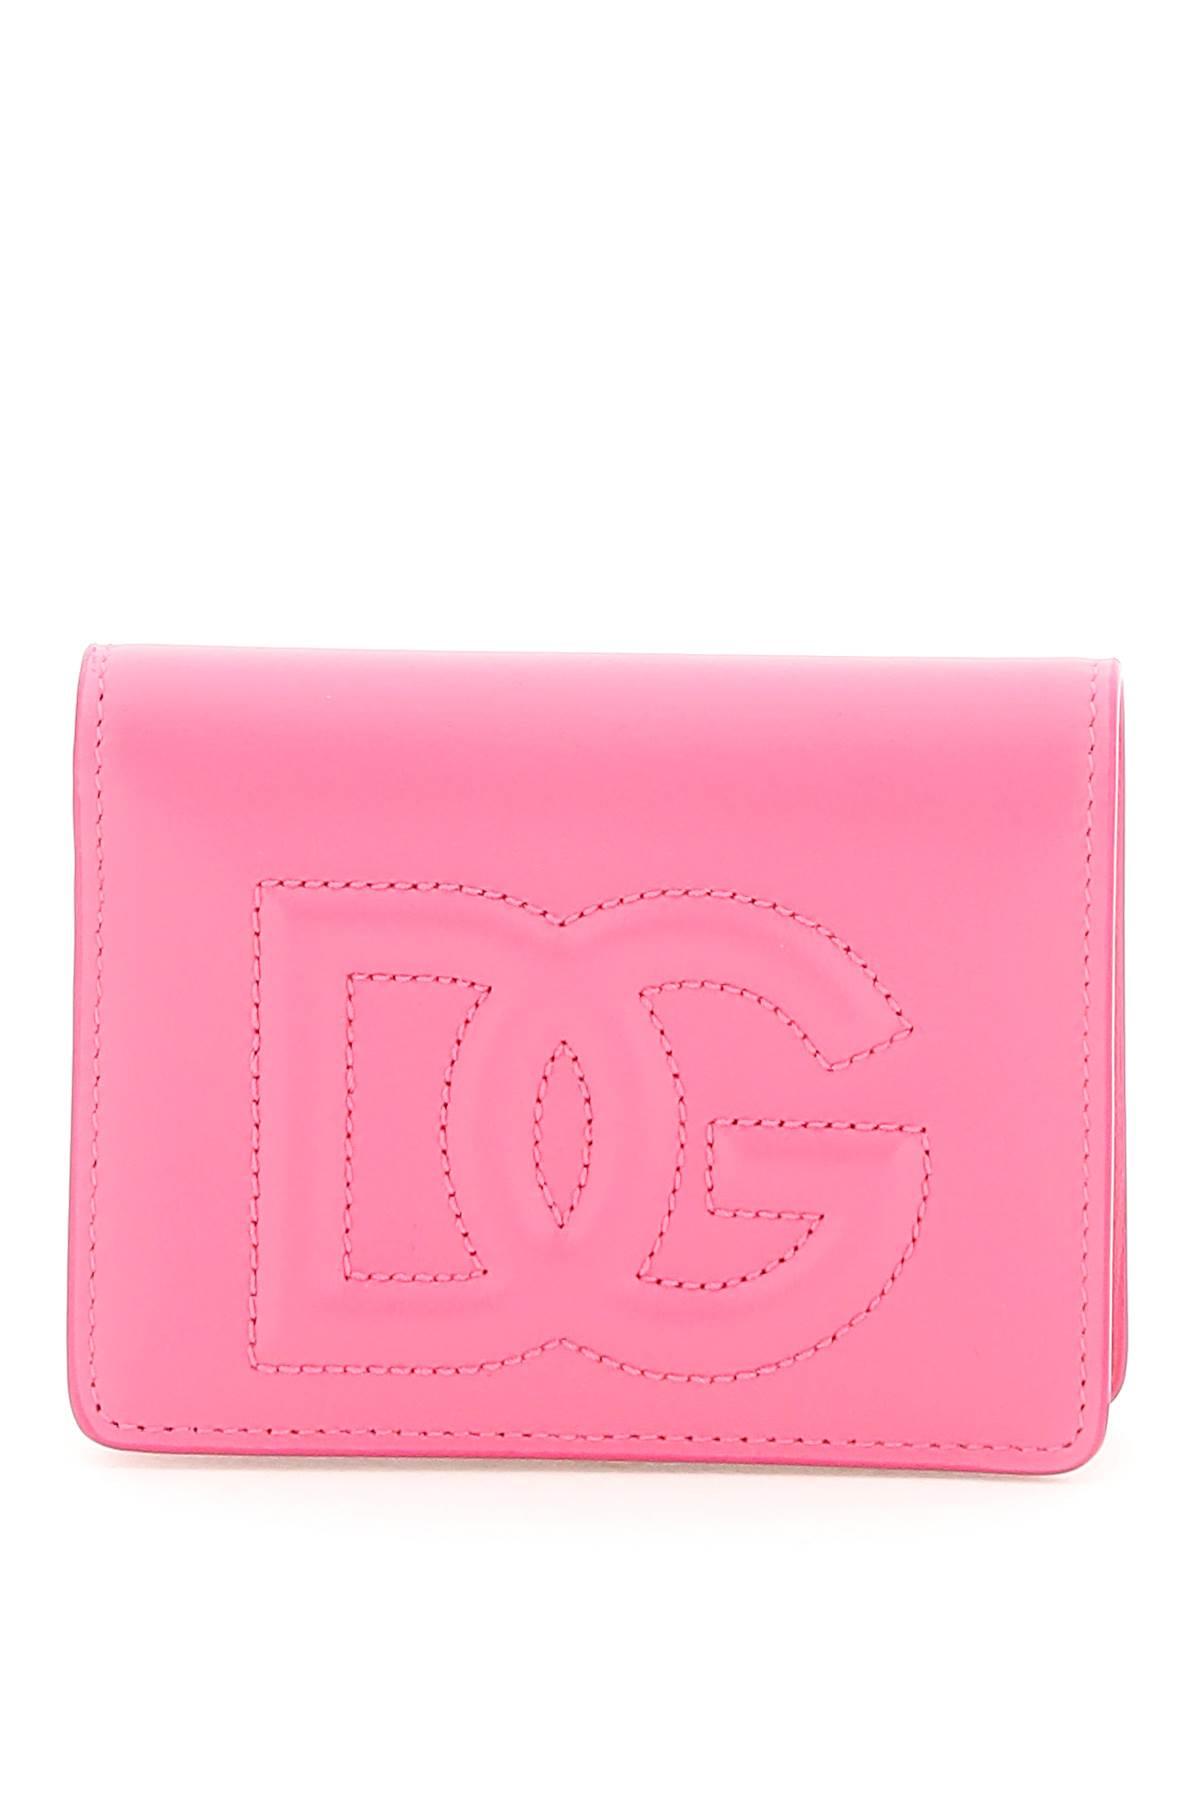 Dolce & Gabbana Logoed Wallet in Pink